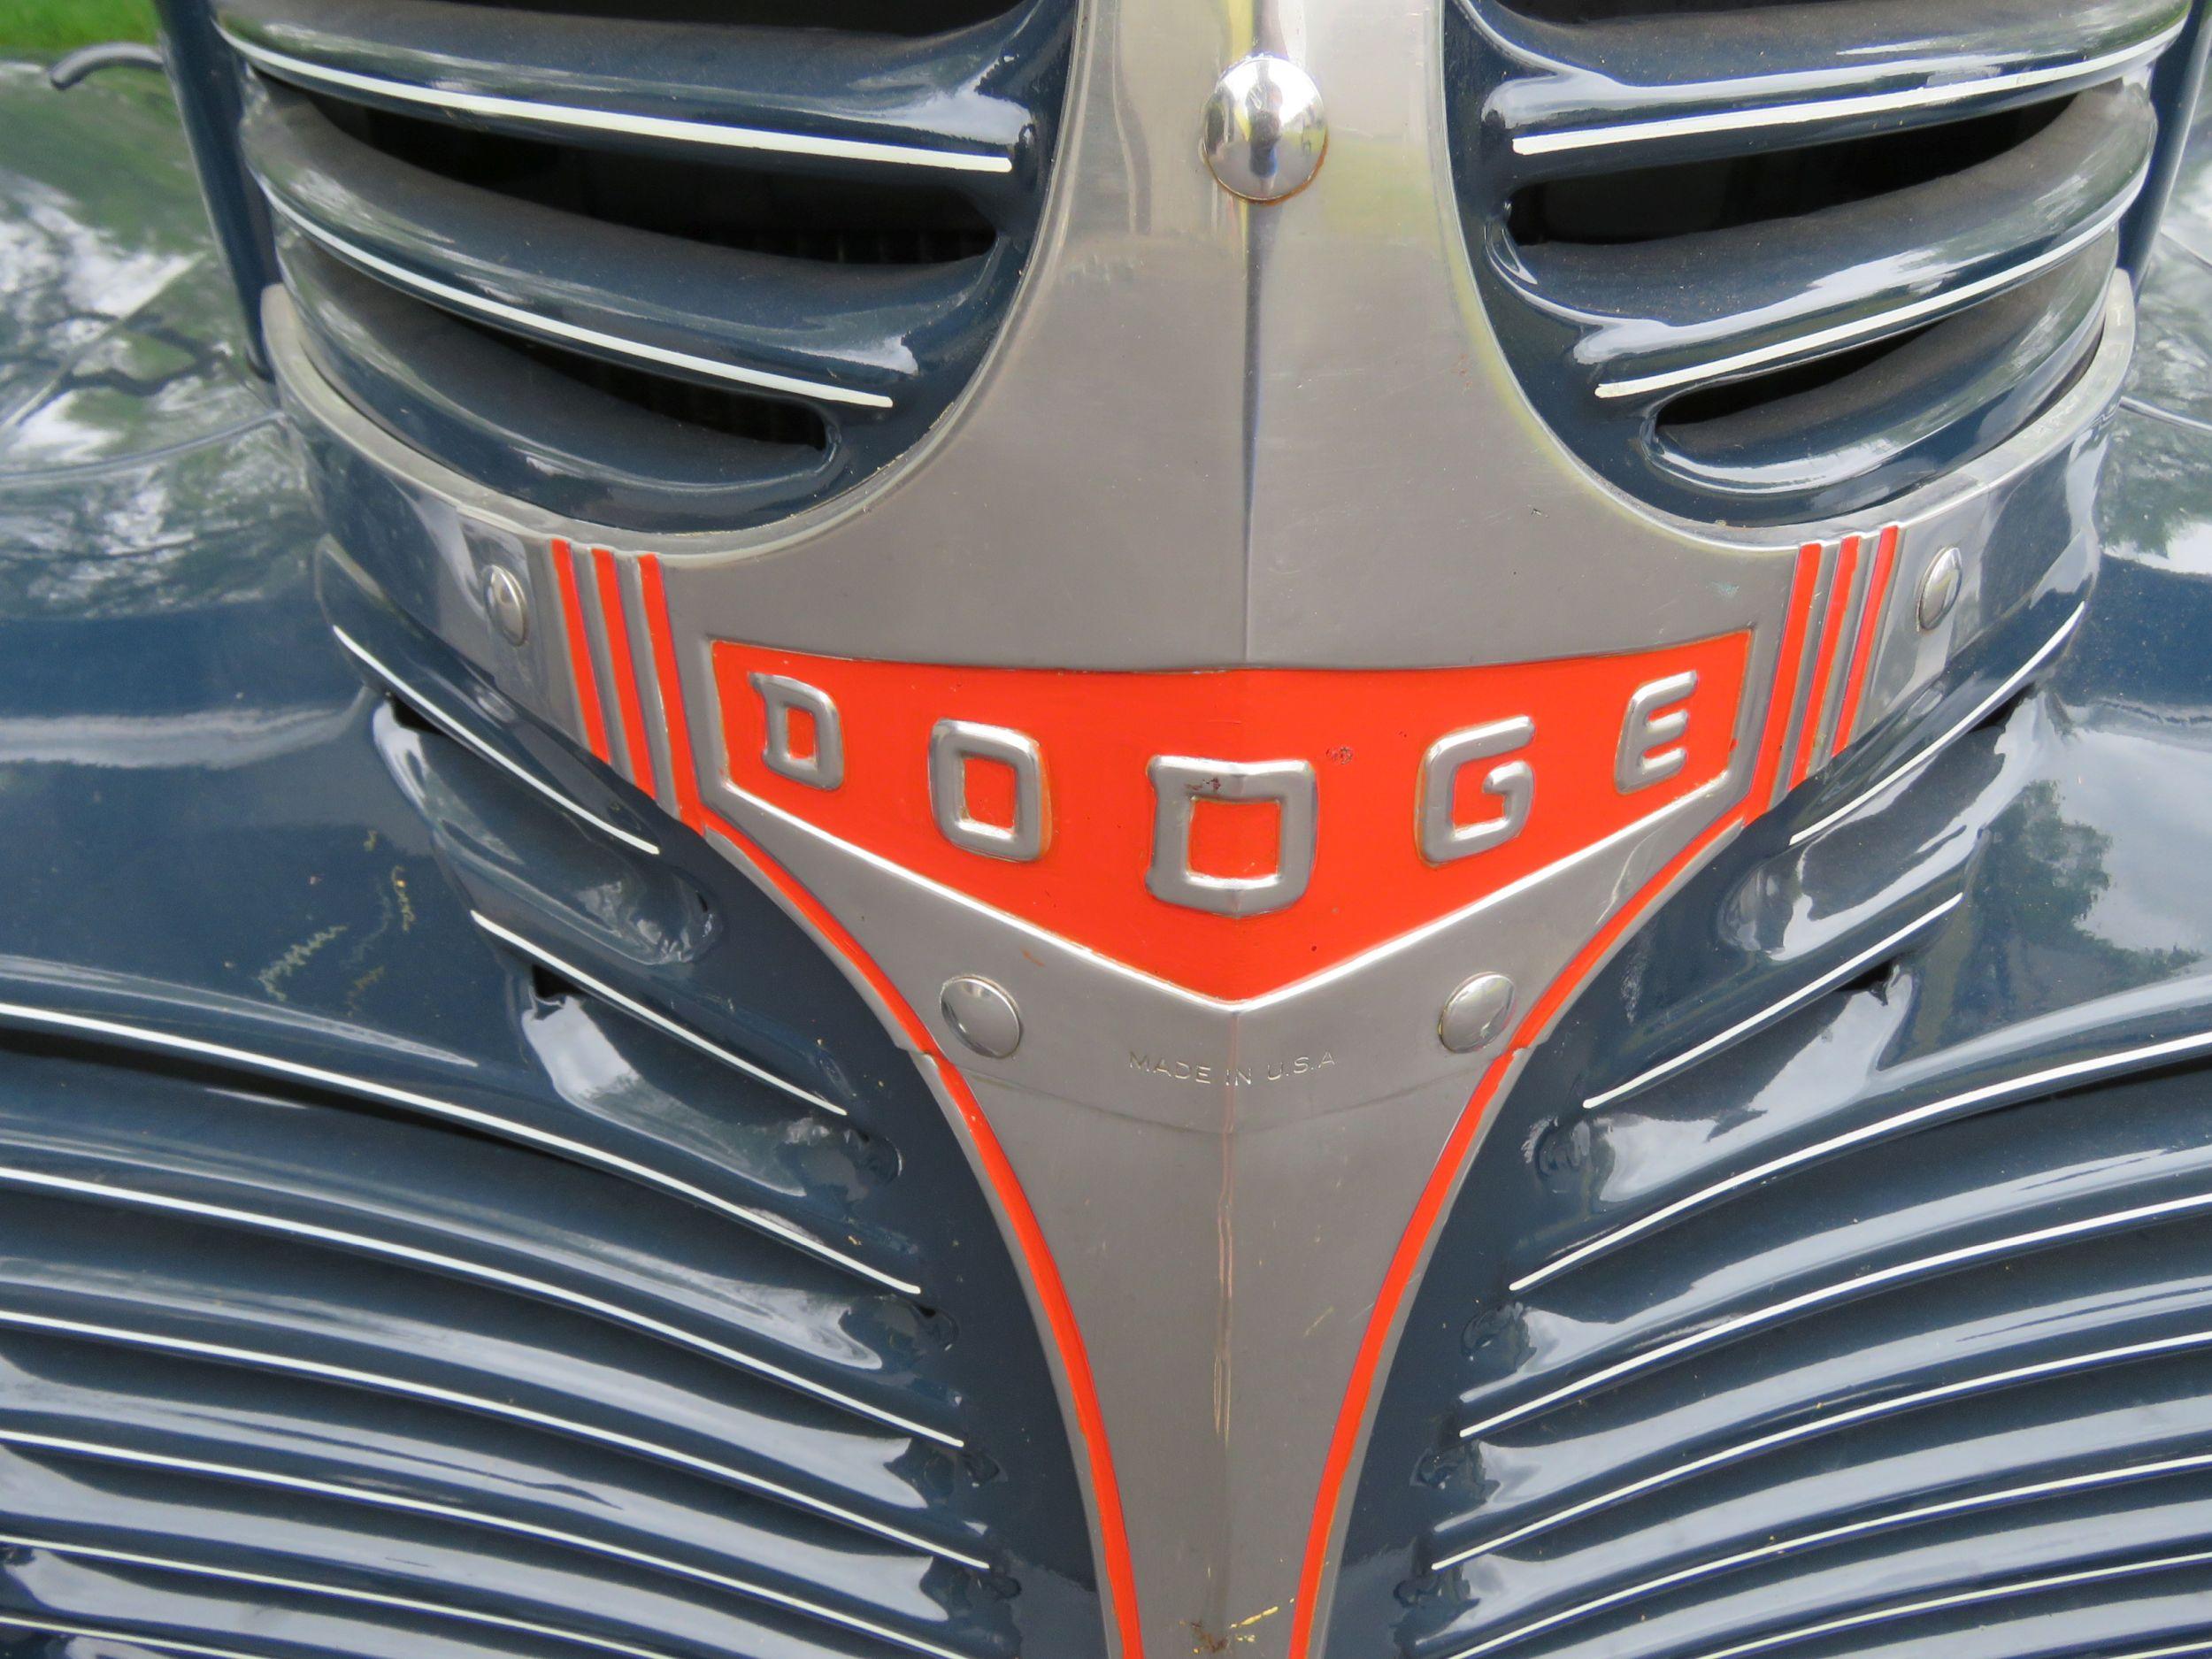 1946 Dodge Pickup